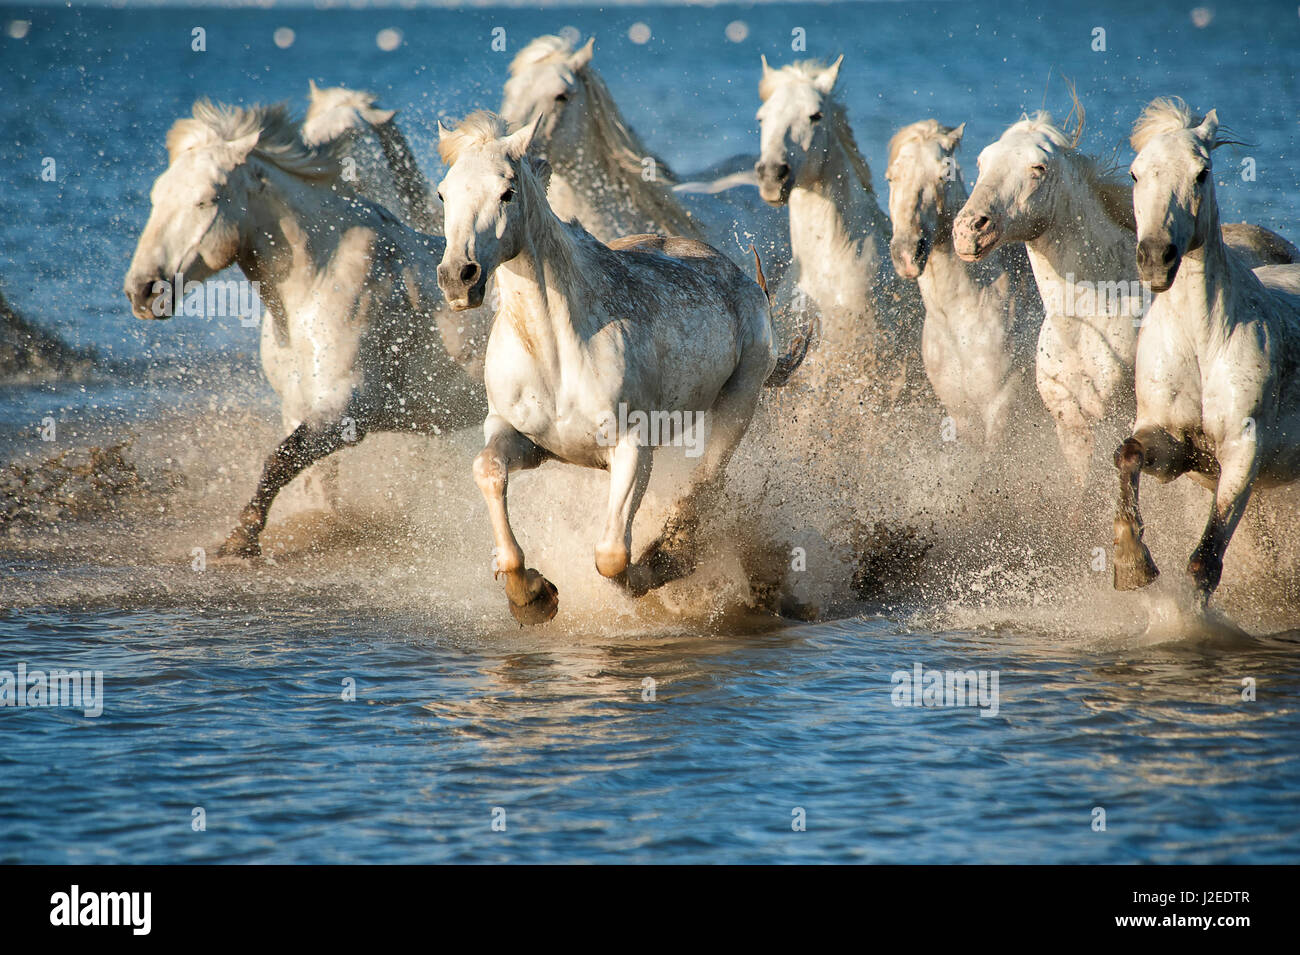 White horses of Camargue, France, running in blue Mediterranean ...